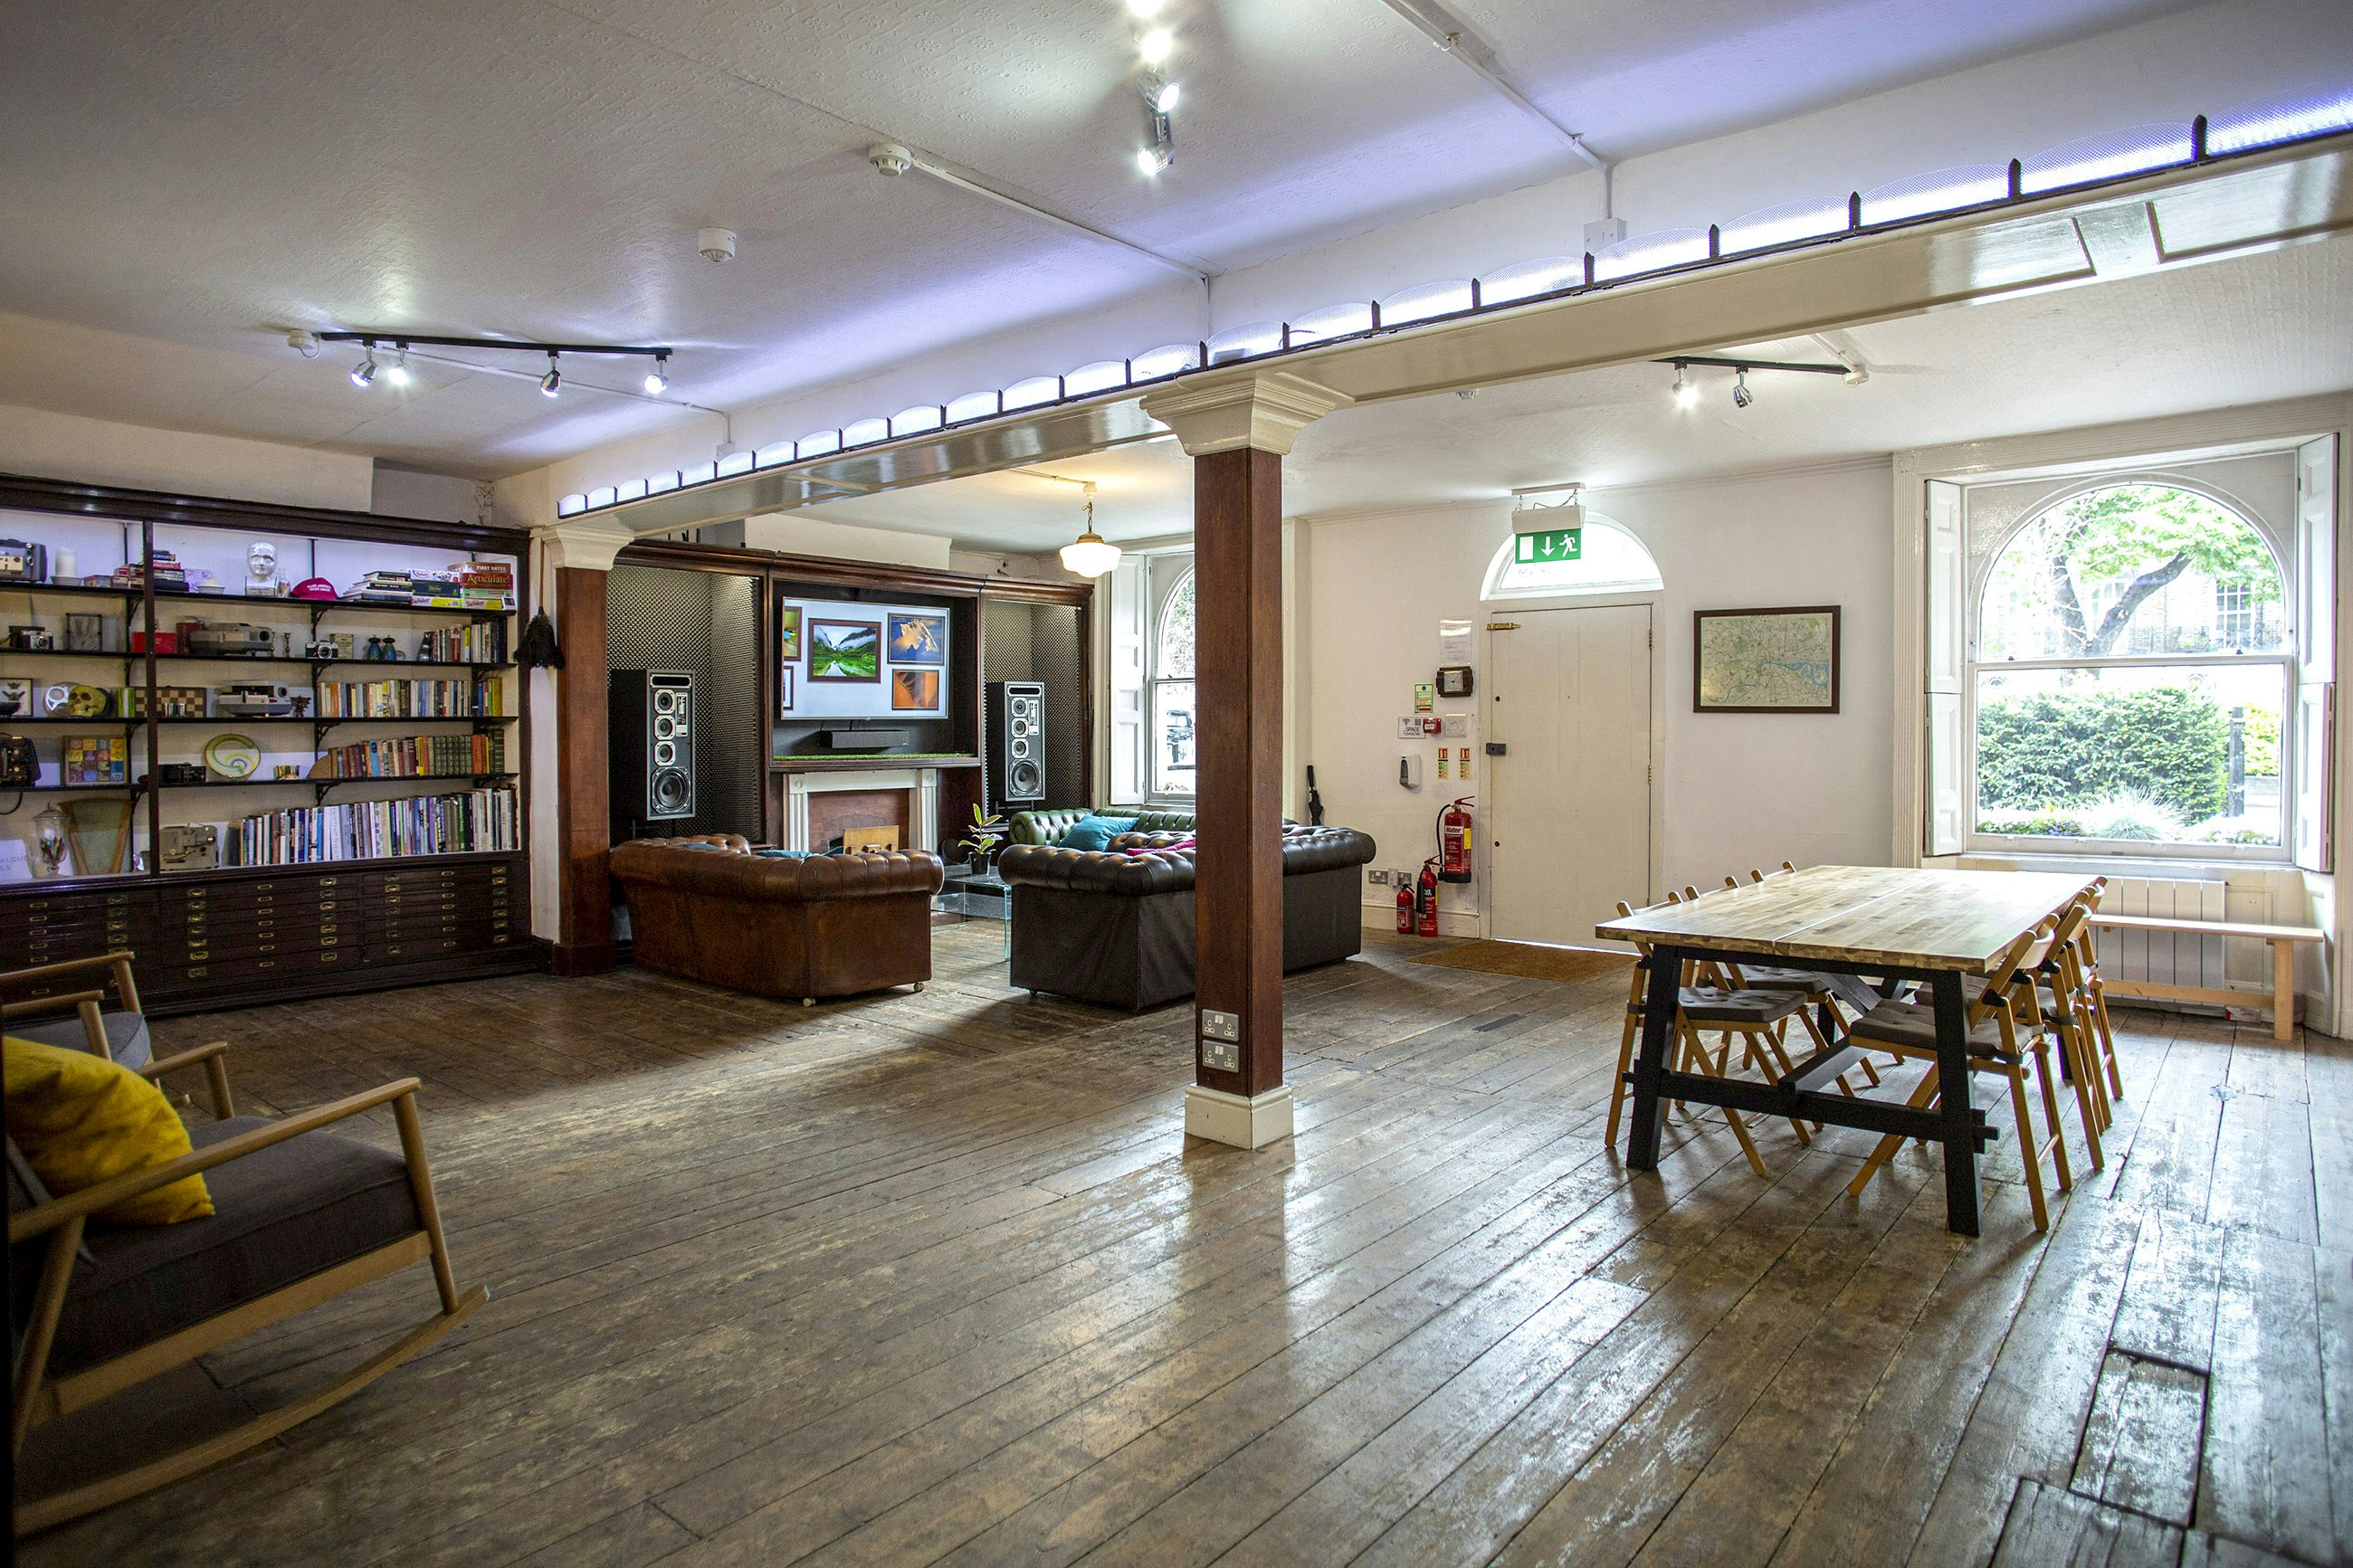 Meeting Rooms Venues in Clerkenwell - Anomalous Space